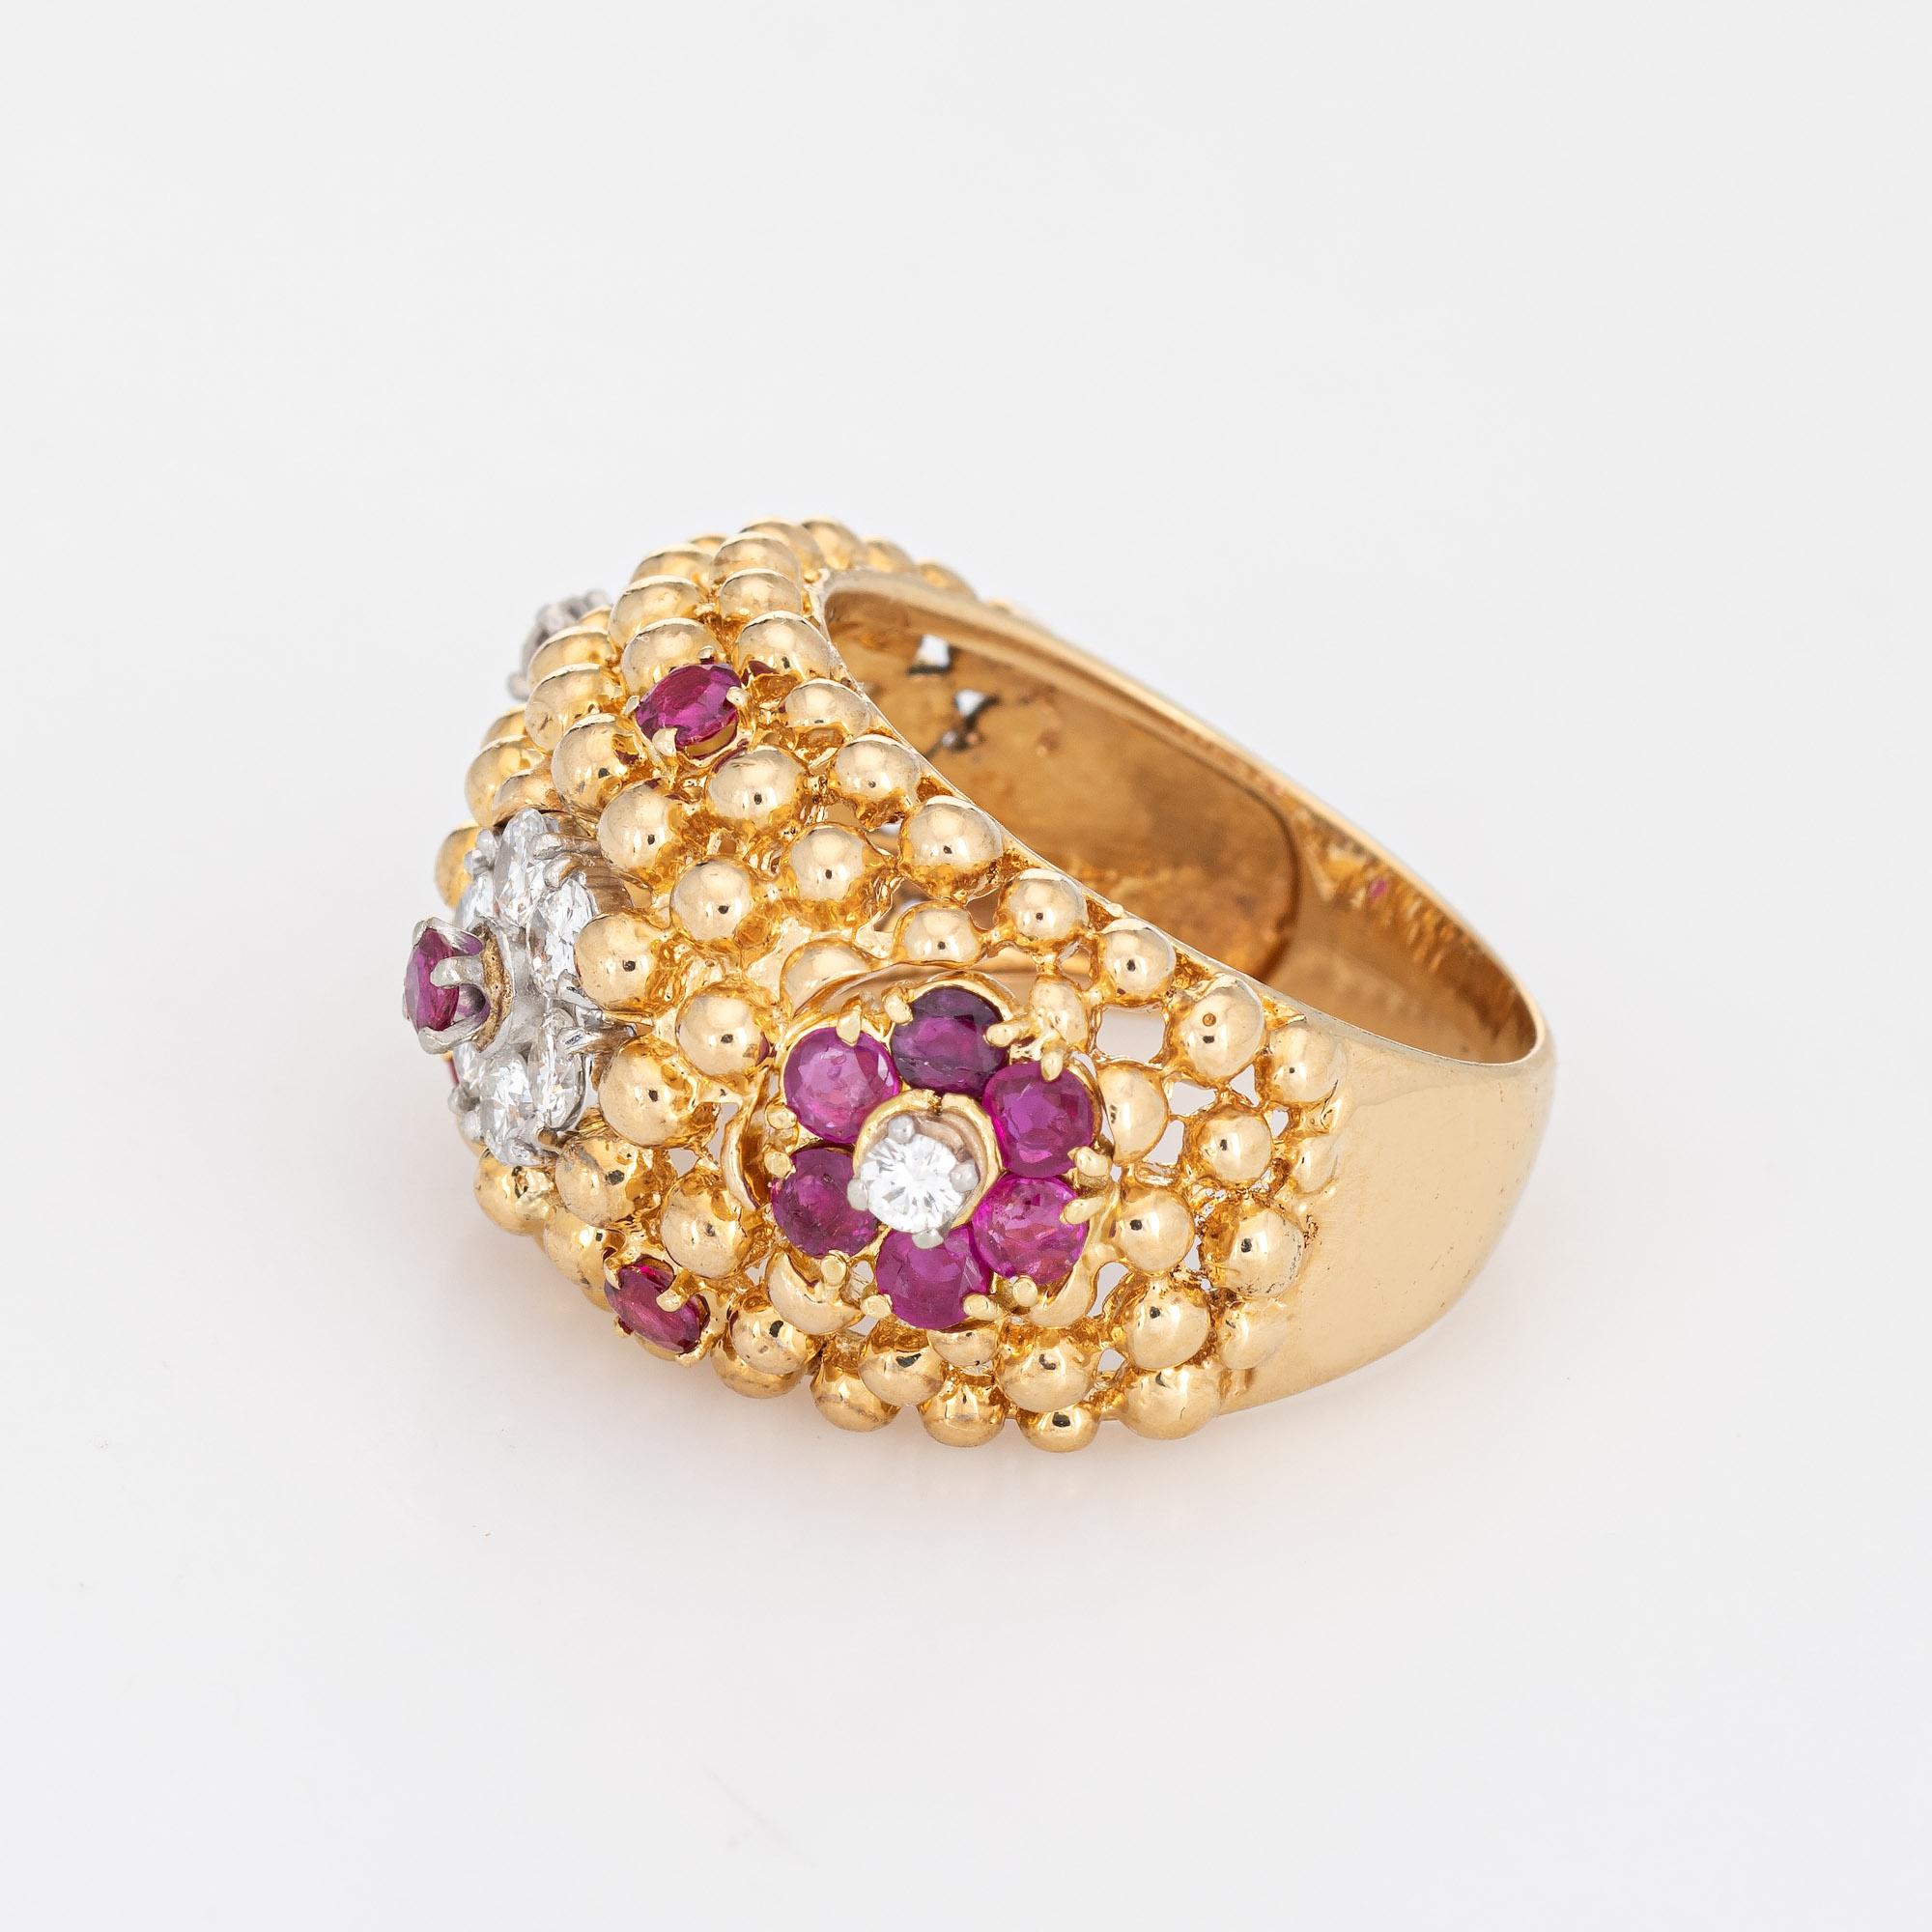 Round Cut Ruby Diamond Ring Domed Flower 18 Karat Gold Band Vintage Jewelry Estate